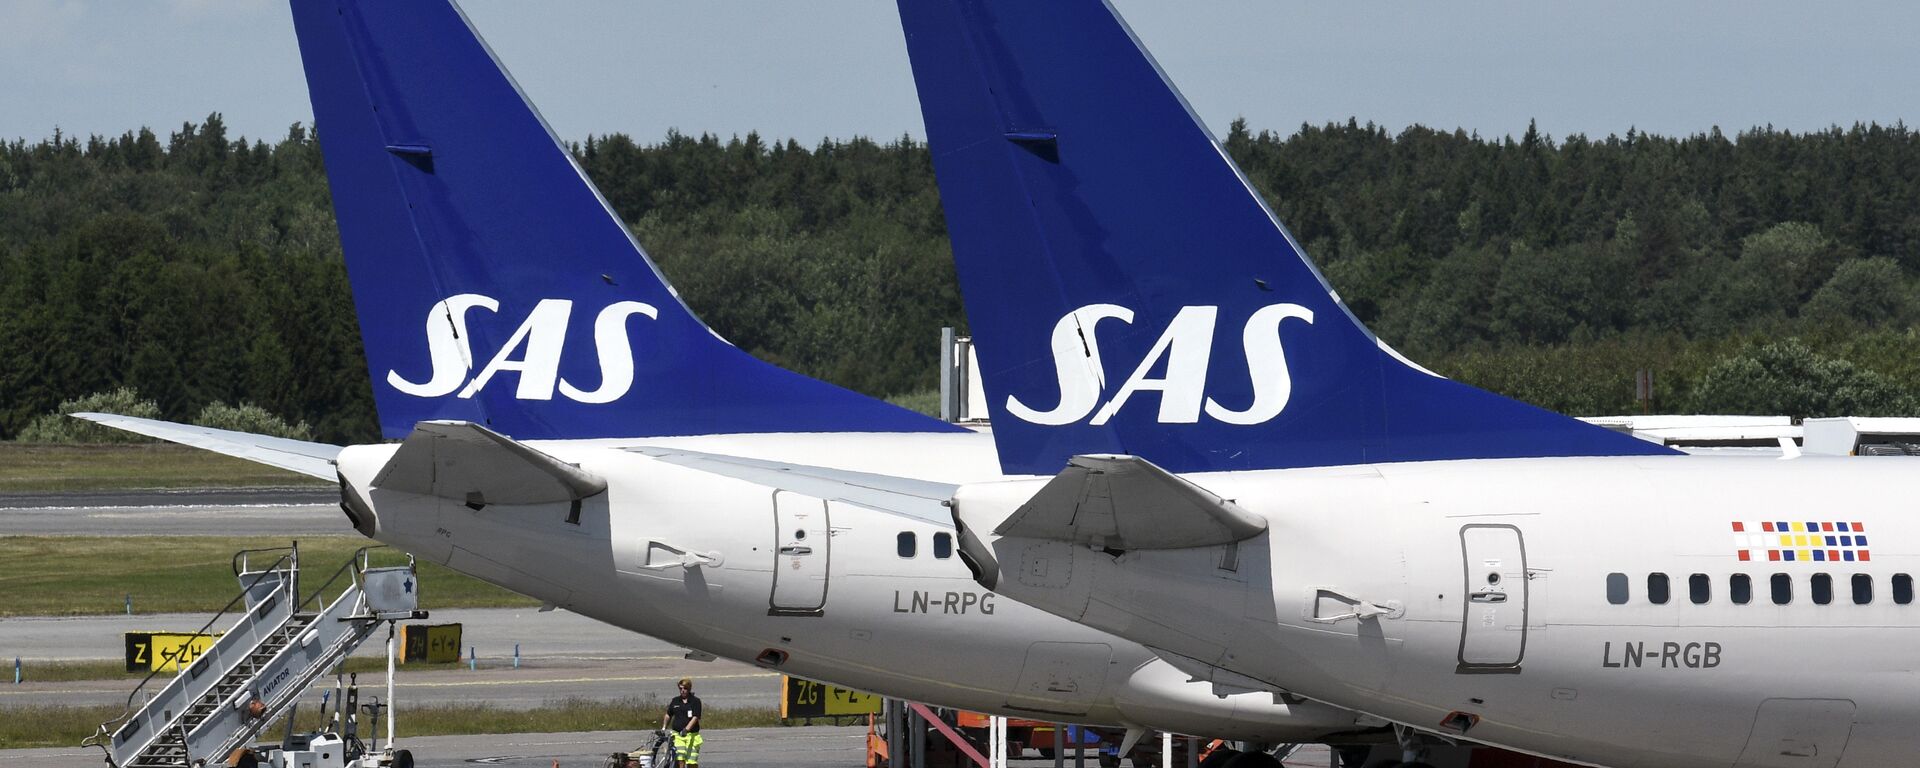 Two of Scandinavian airline (SAS) Boeing 737 aircrafts parked at Terminal 4 at Arlanda Airport in Stockholm, Sweden - Sputnik International, 1920, 05.11.2021